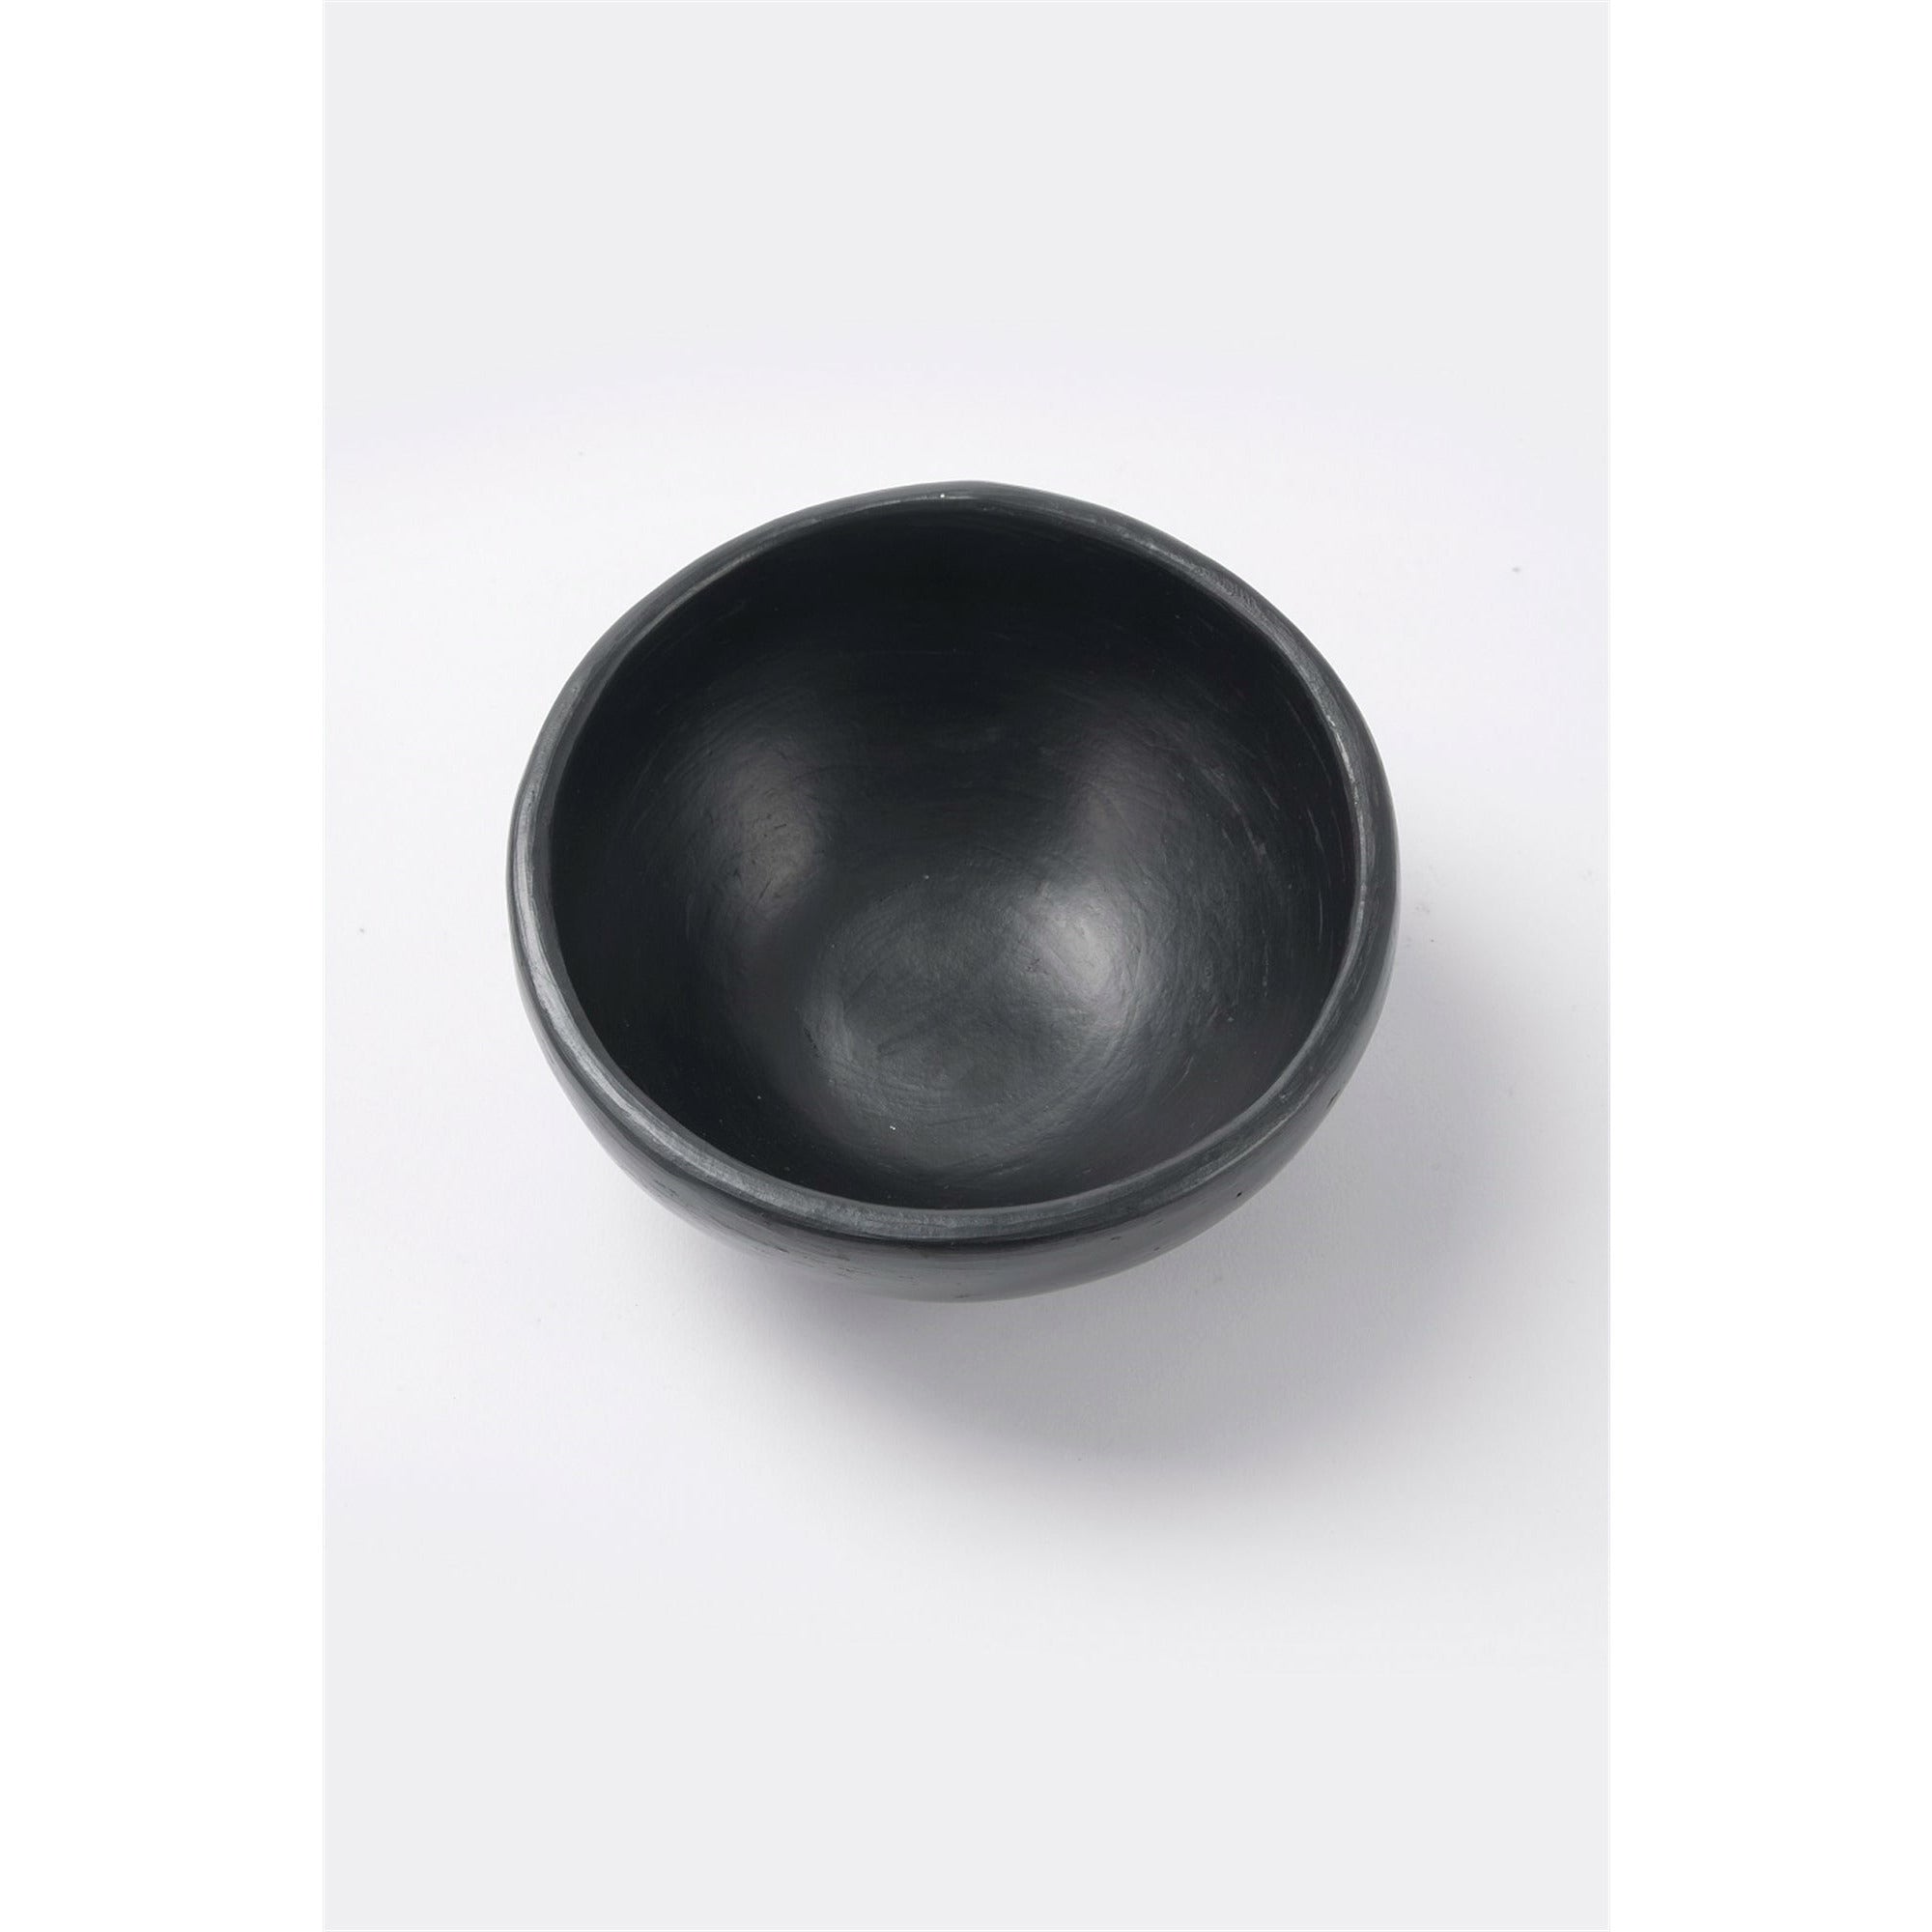 Black Clay, La Chamba Round Saute Pan - Small